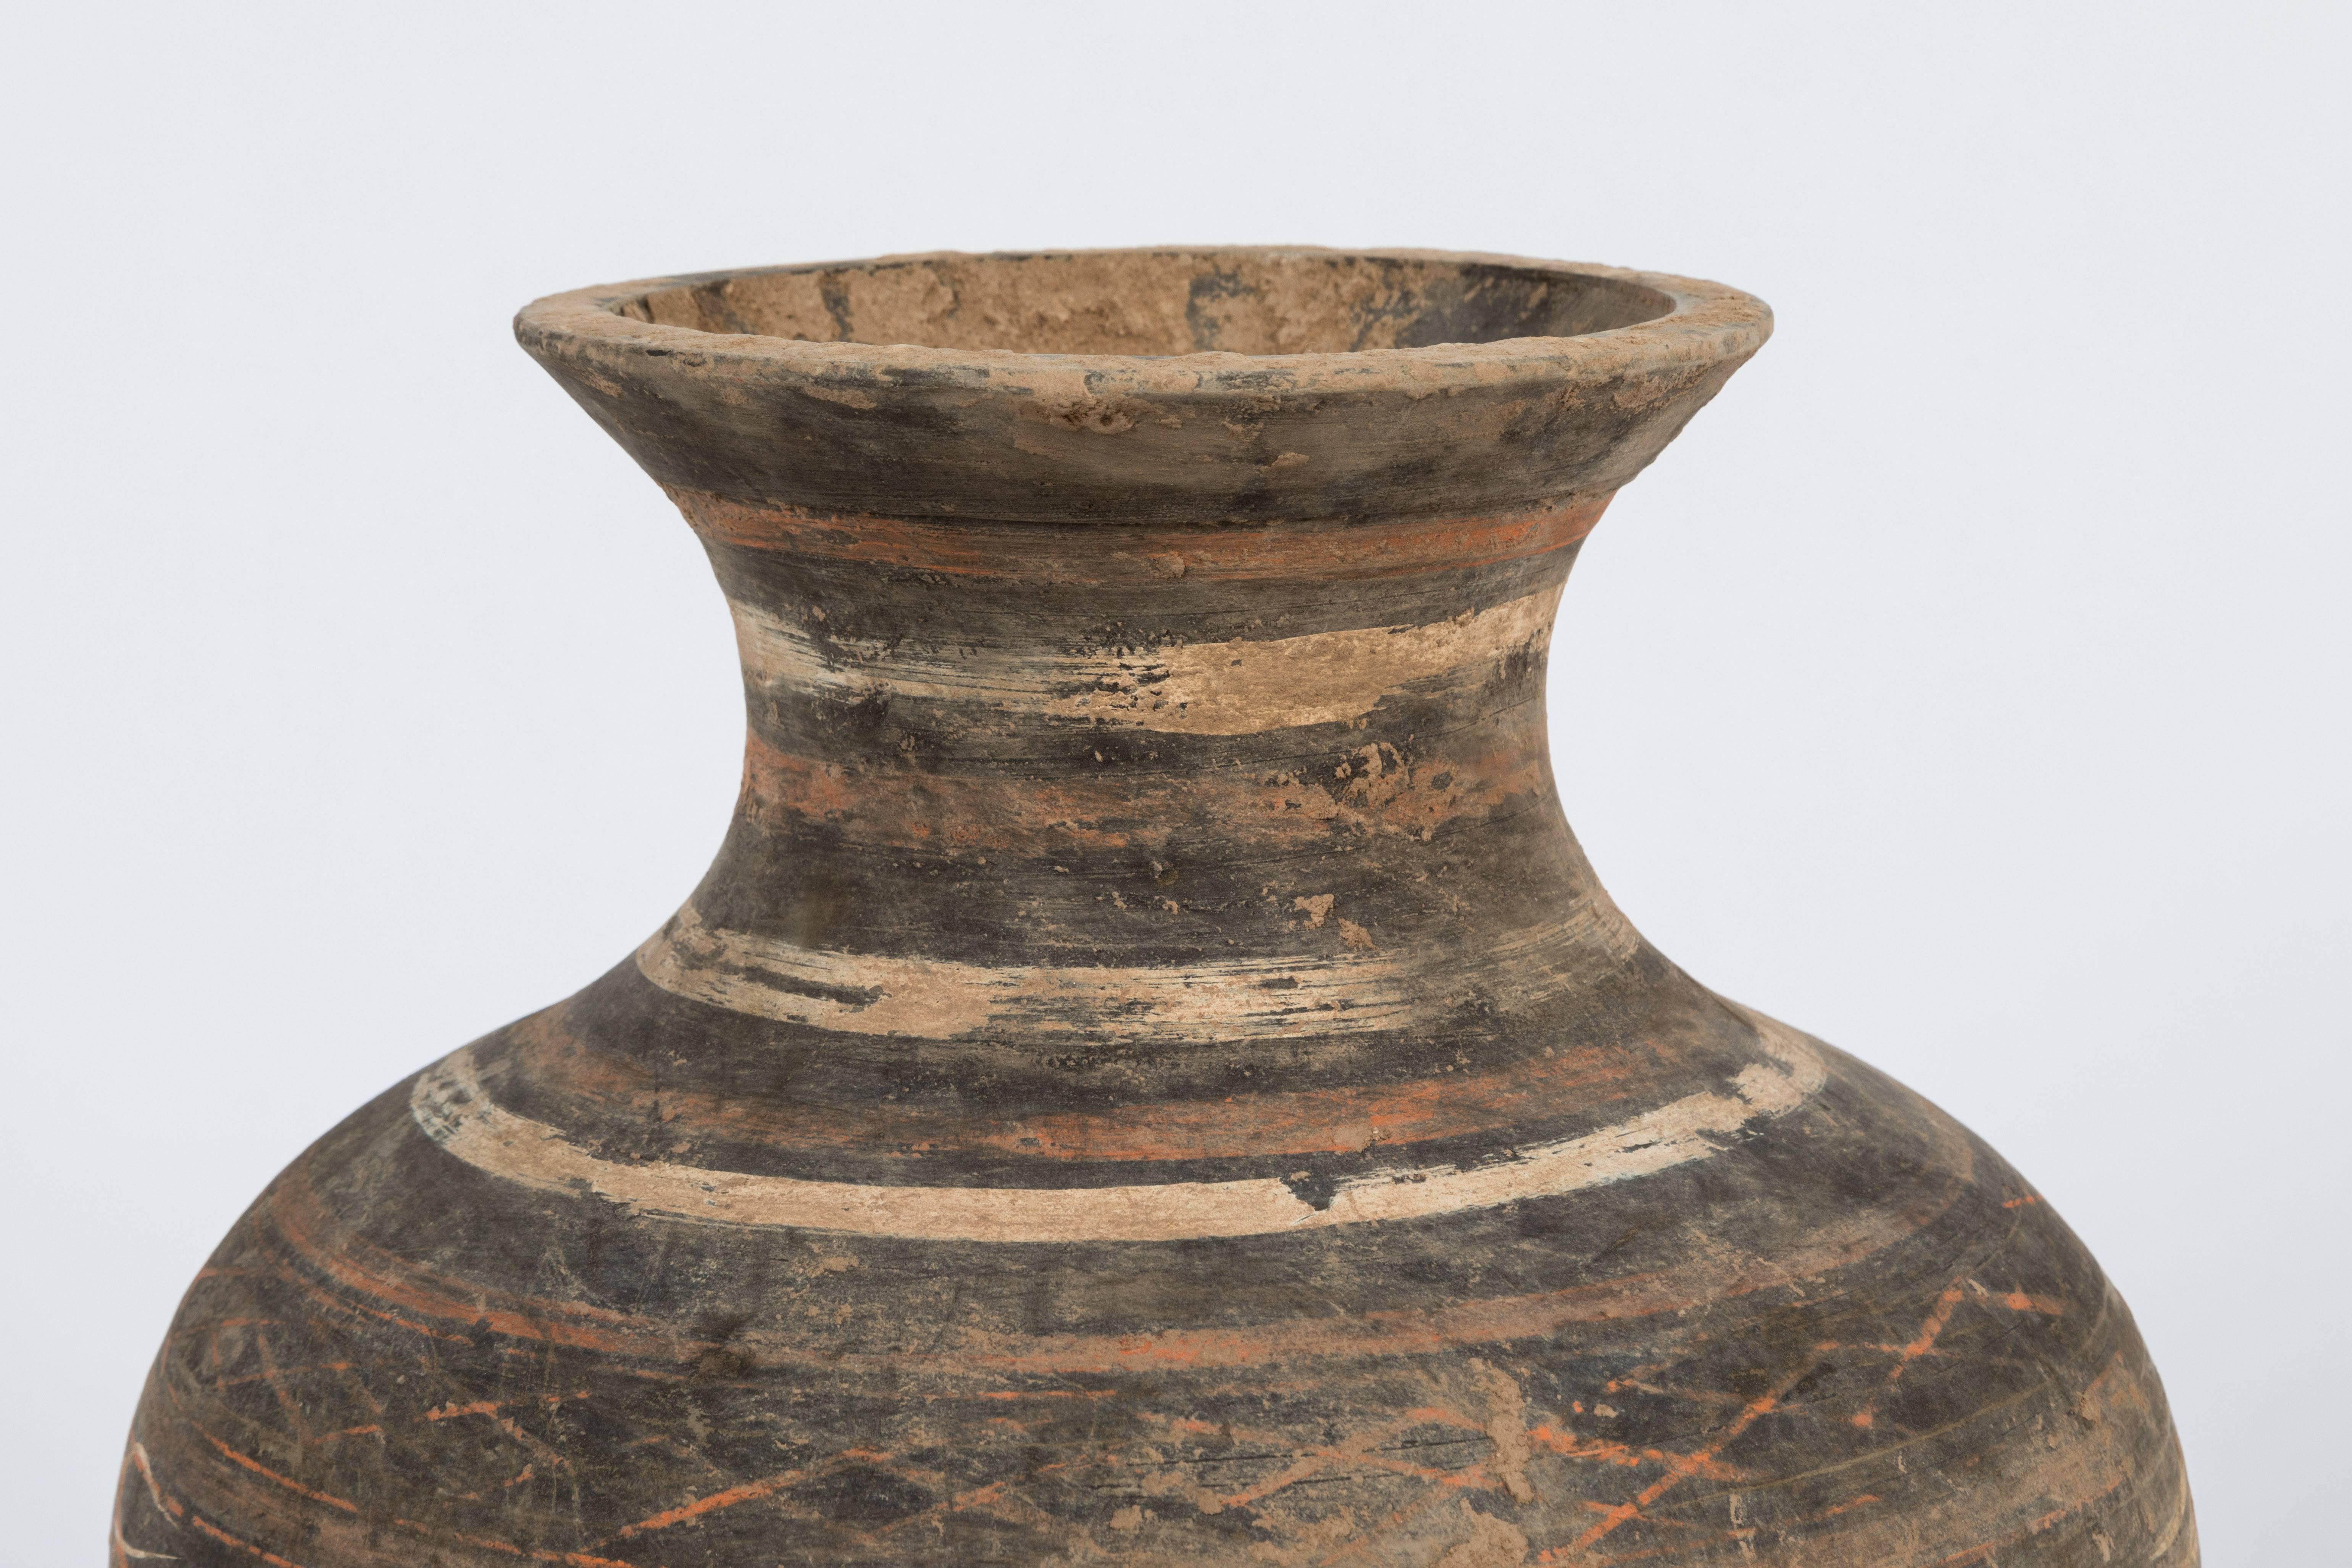 Large Han dynasty hu jar ceramic sculpture, China, 206 B.C-220 A.D.